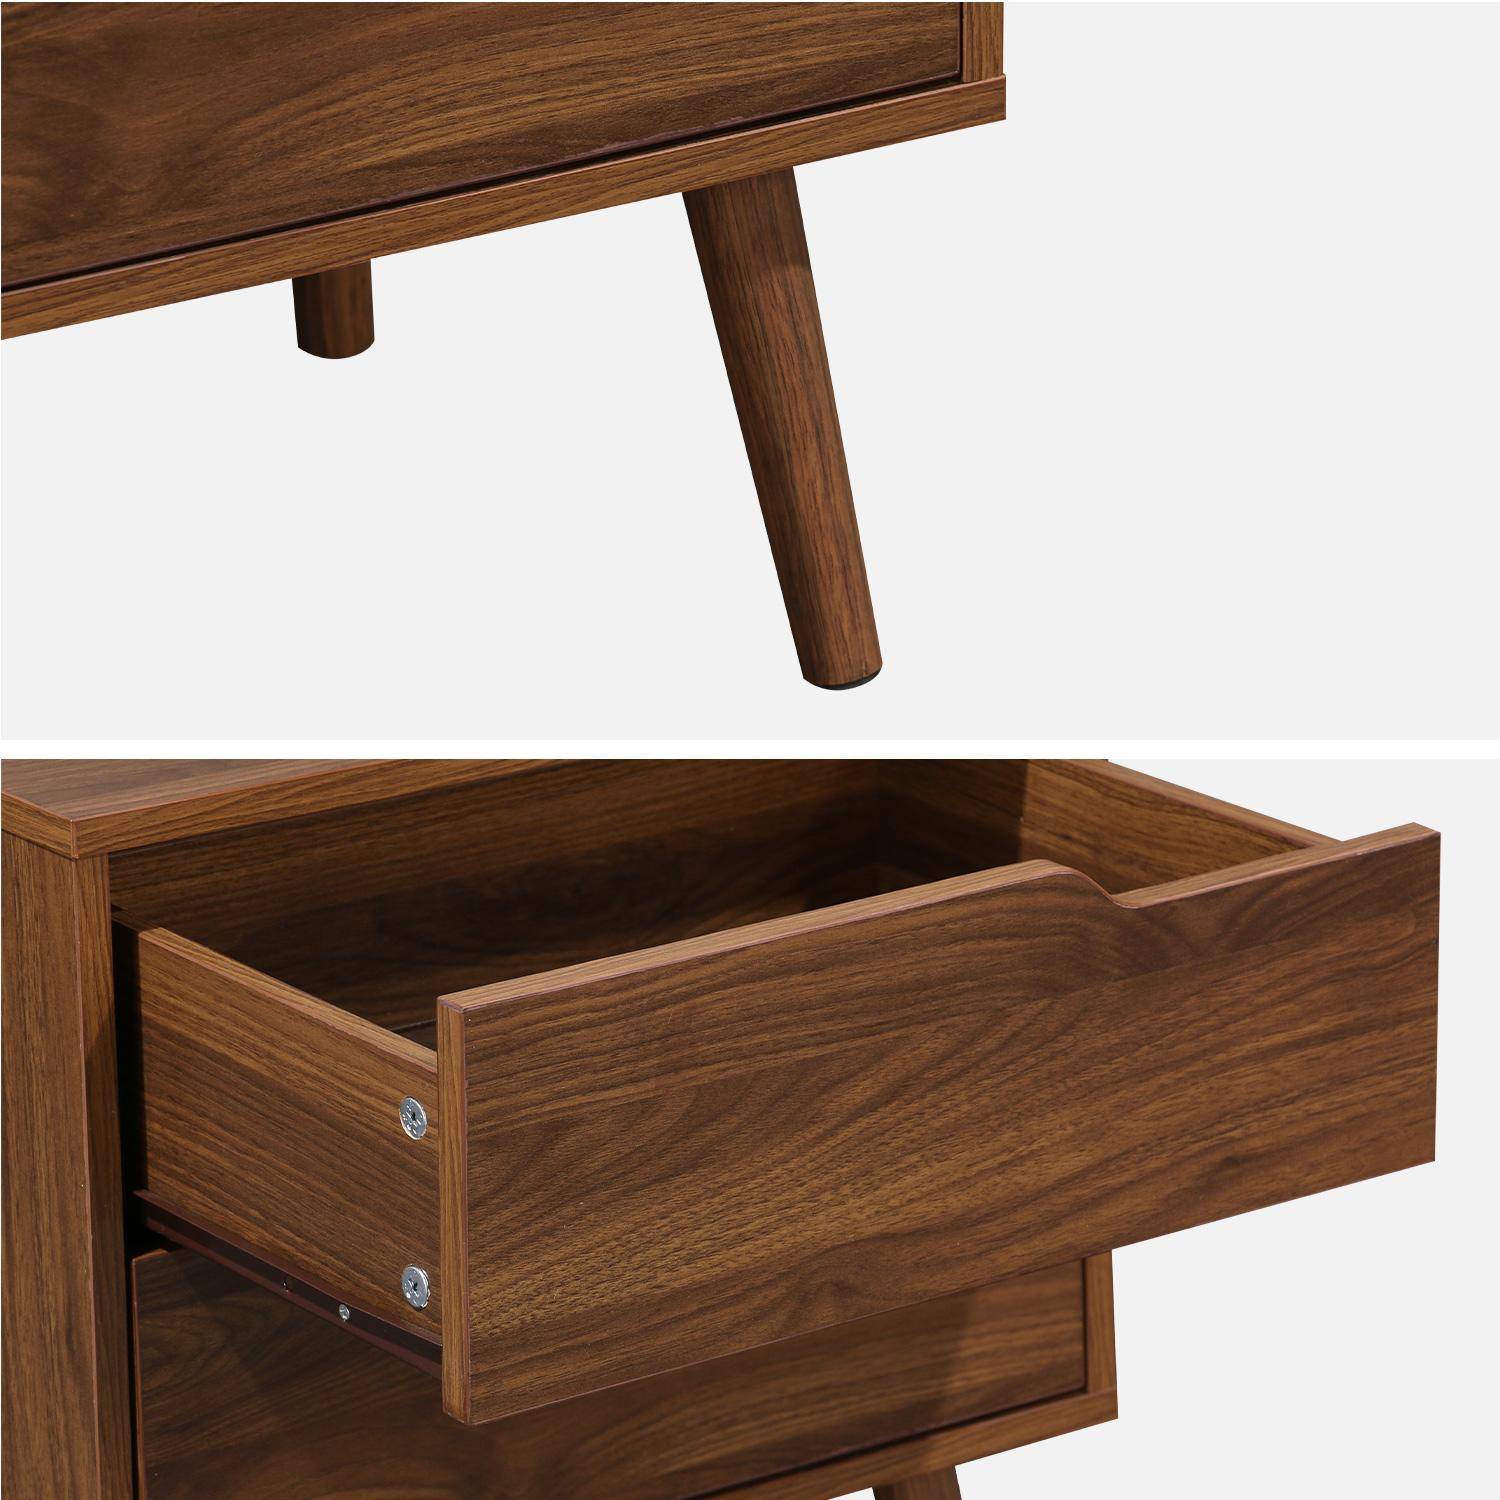 Pair of walnut wood-effect bedside tables, 50x40x55cm, Nepal, 2 drawers,sweeek,Photo6